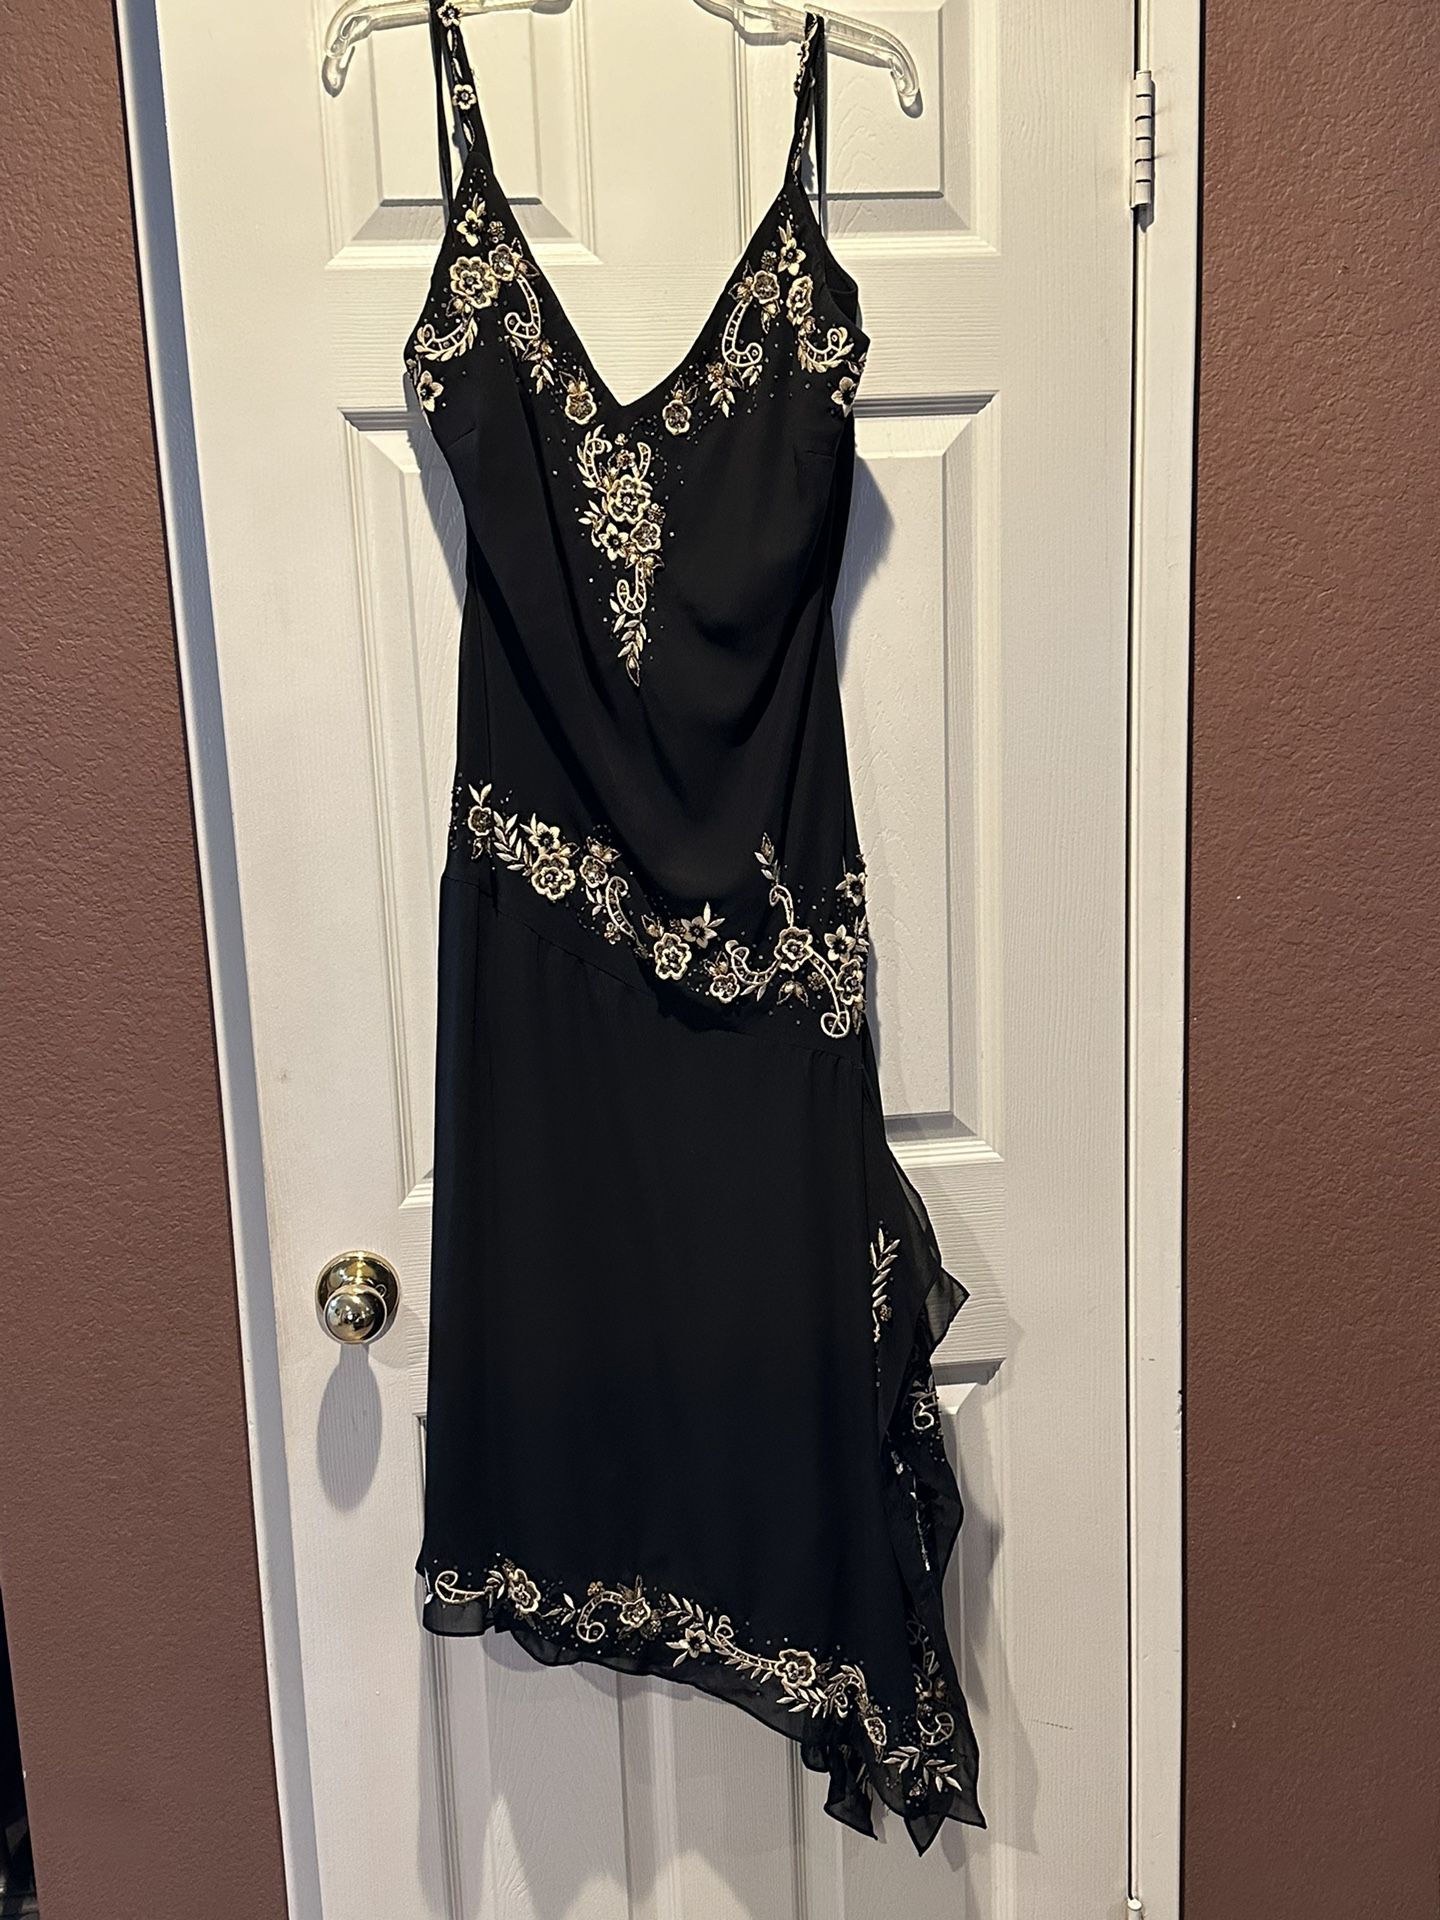 Beautiful Black/Gold Dress $70 Obo 